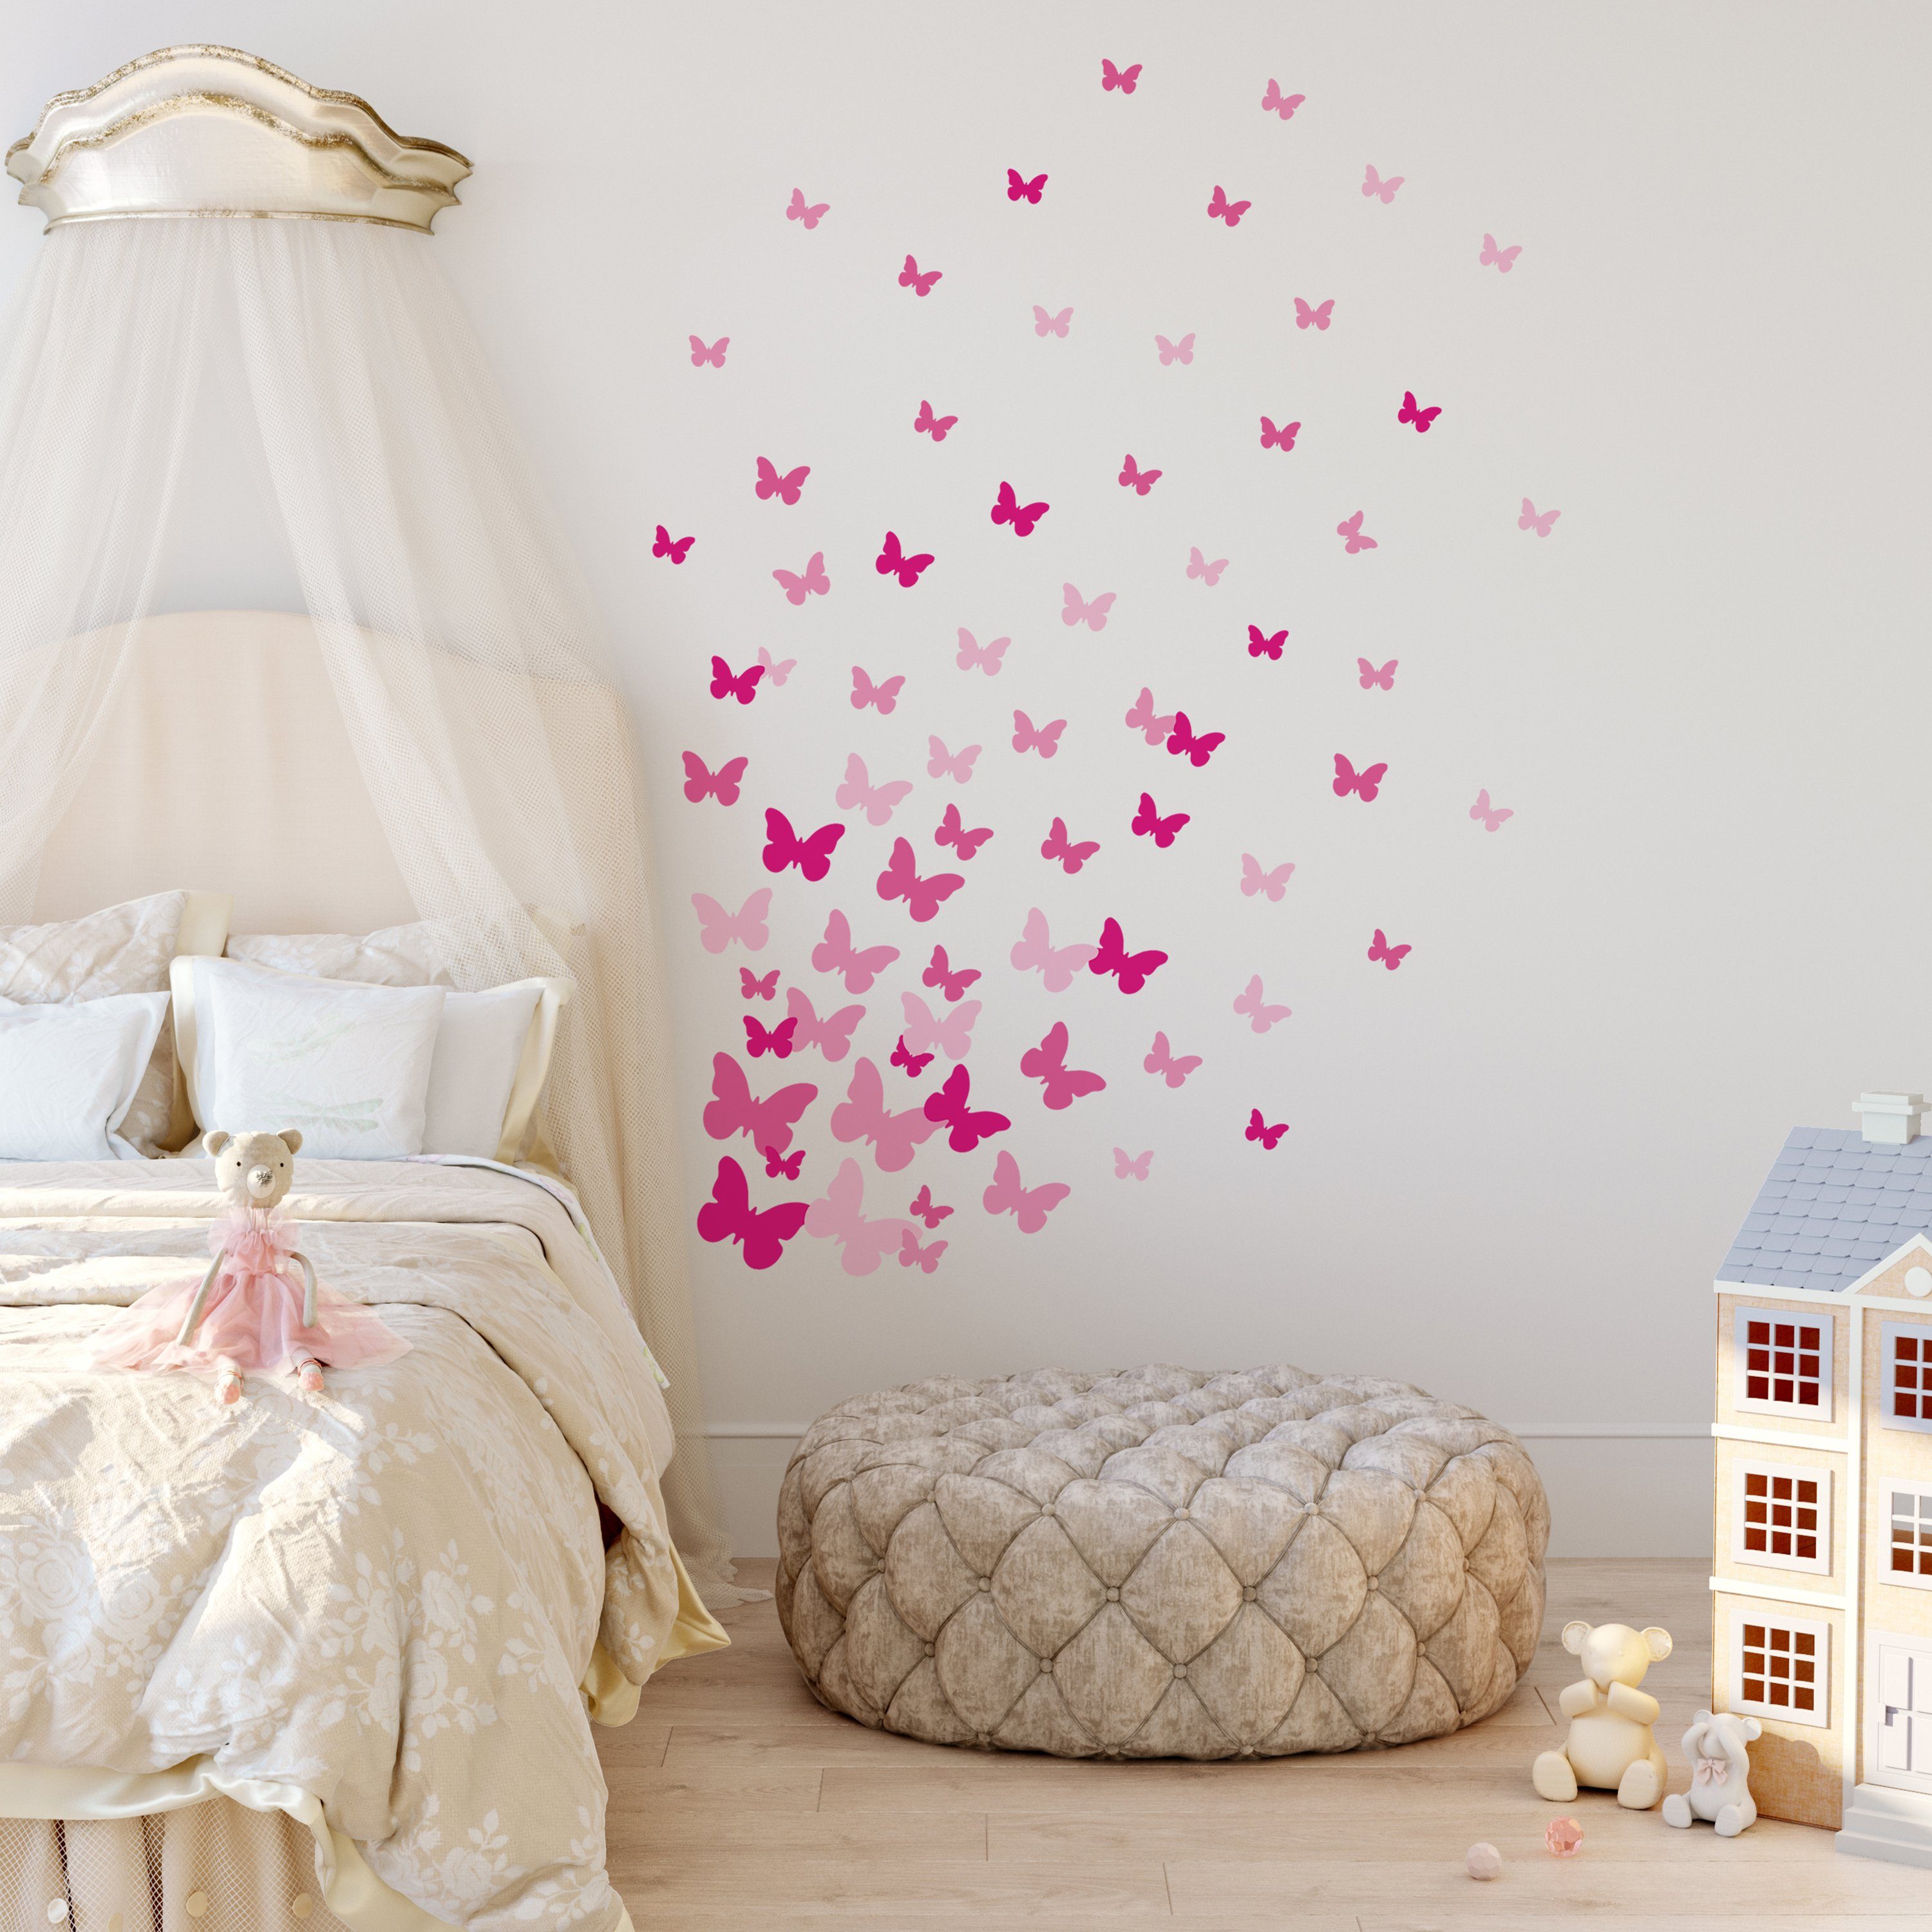 RoomMates Wandsticker Schmetterlinge Pink